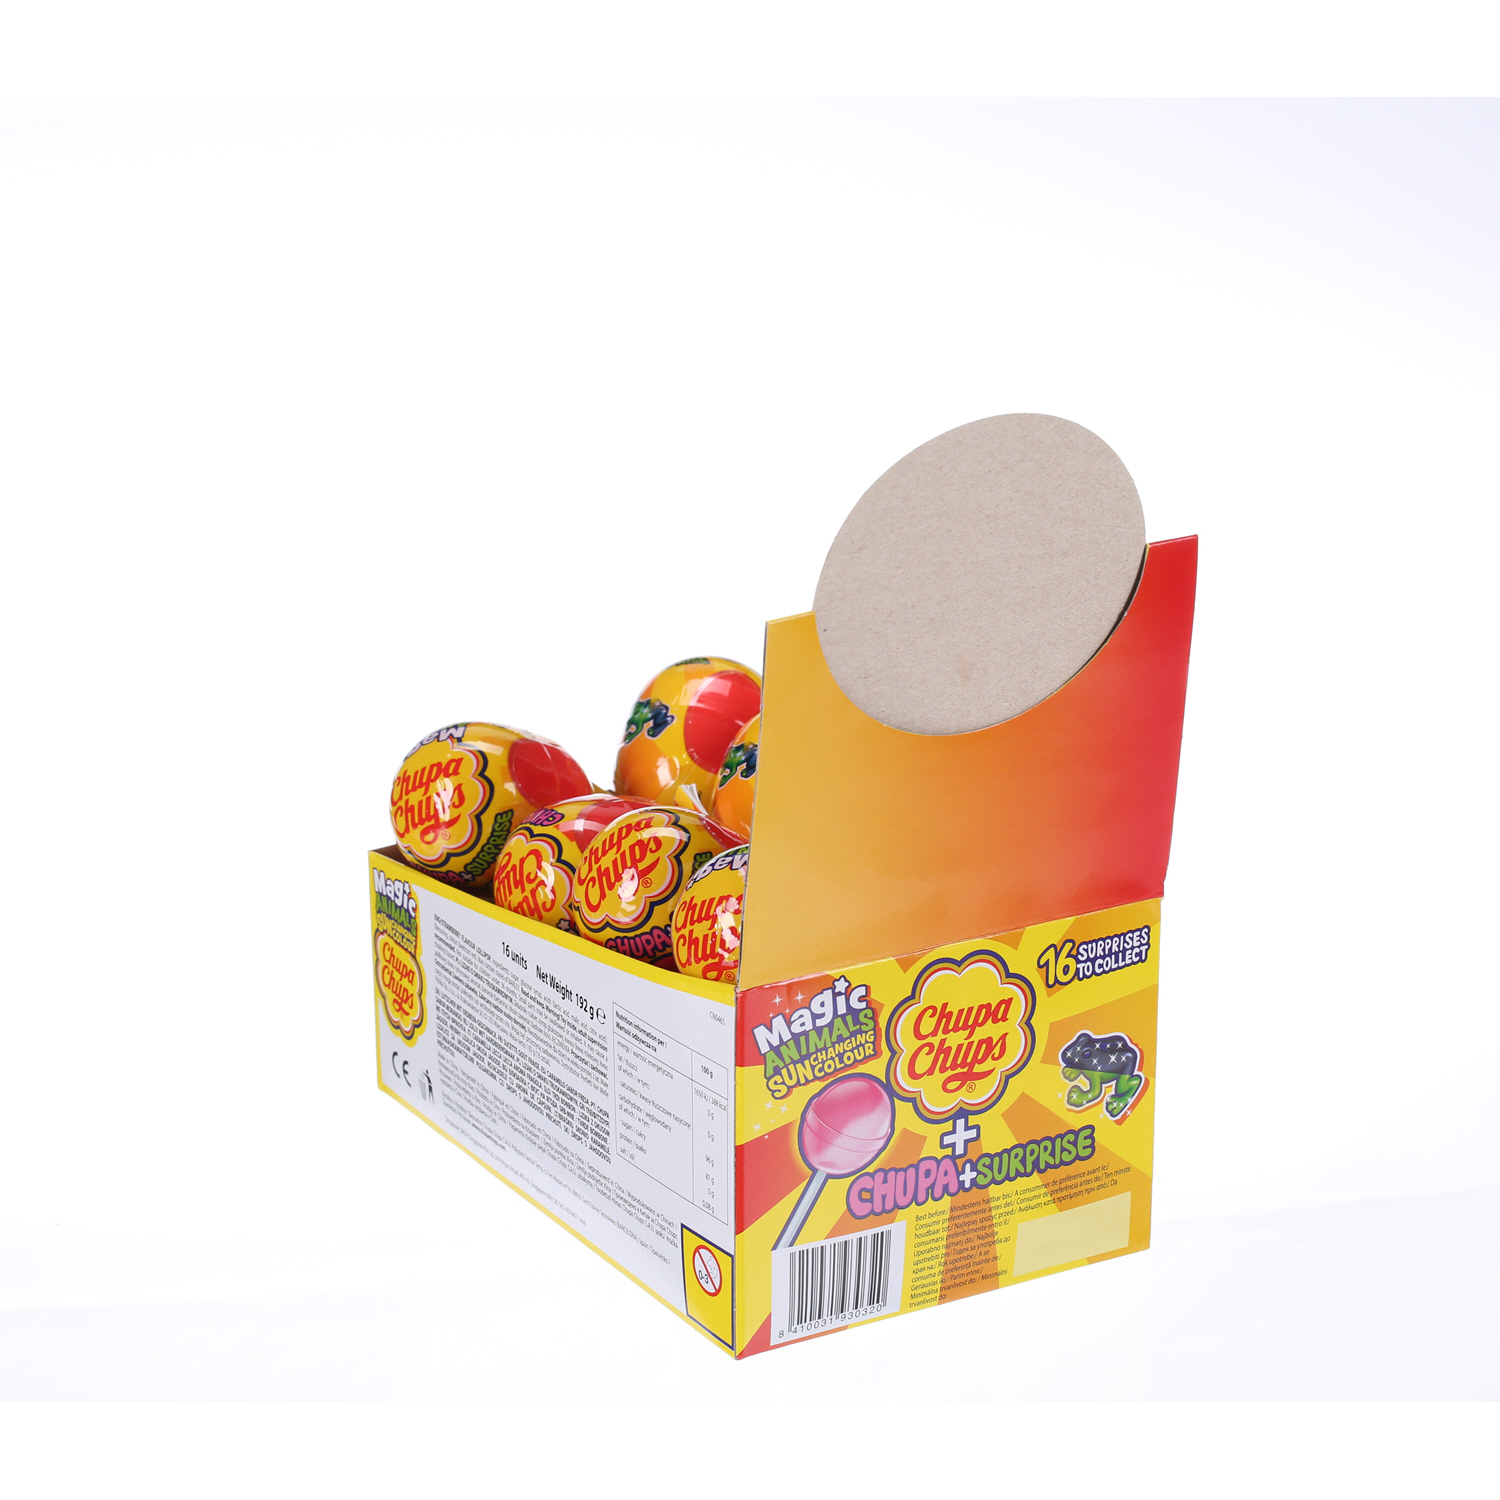 Chupa Chups Surprises Singles Lollipop 12 g × 16 Pieces